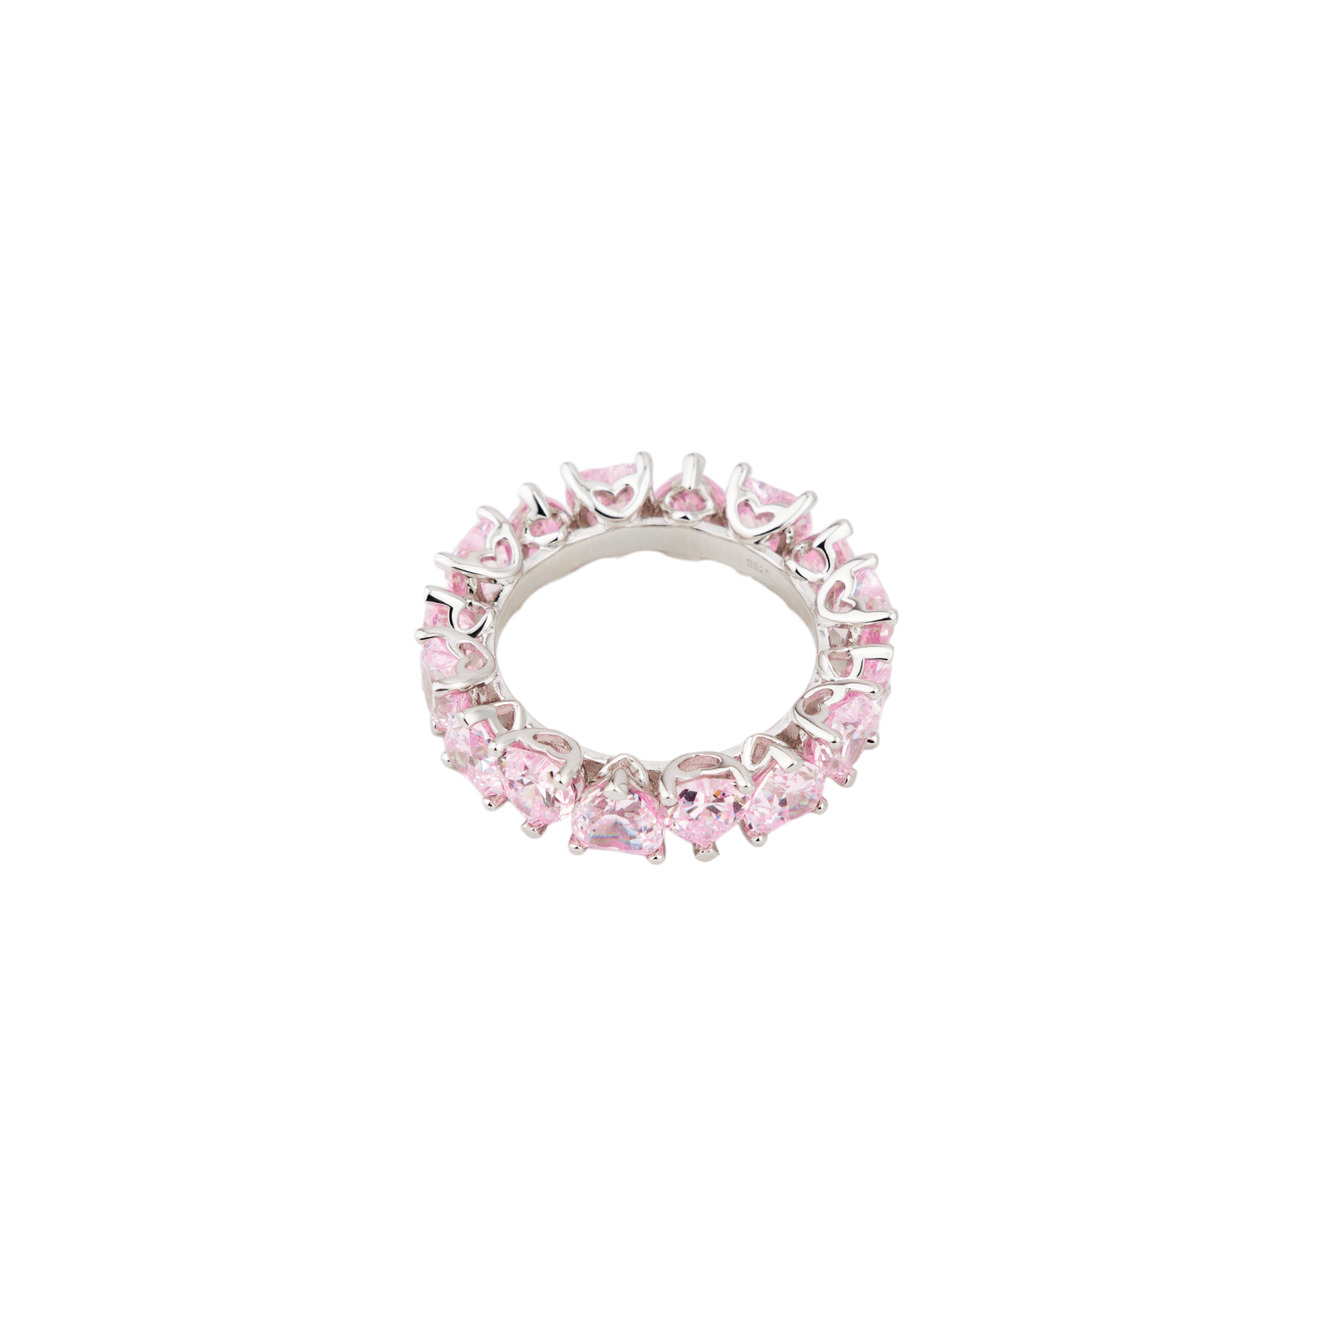 Holy Silver Тонкое кольцо из дорожки розовых кристаллов цена и фото